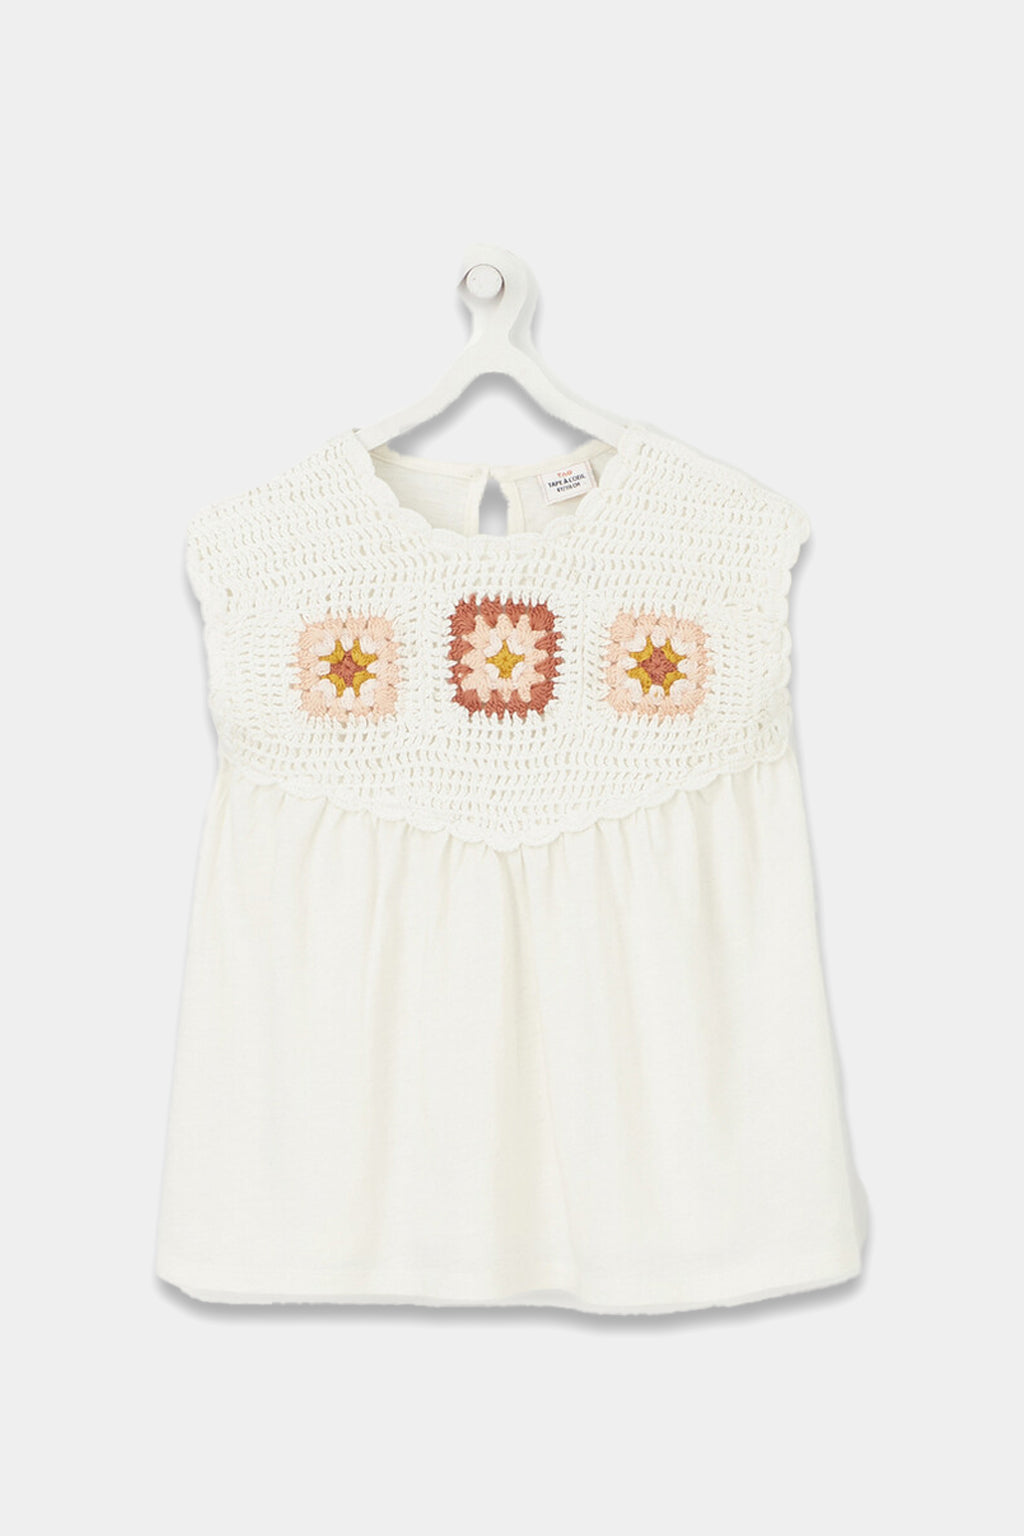 Tao - Cream Organic Cotton Crochet T-shirt